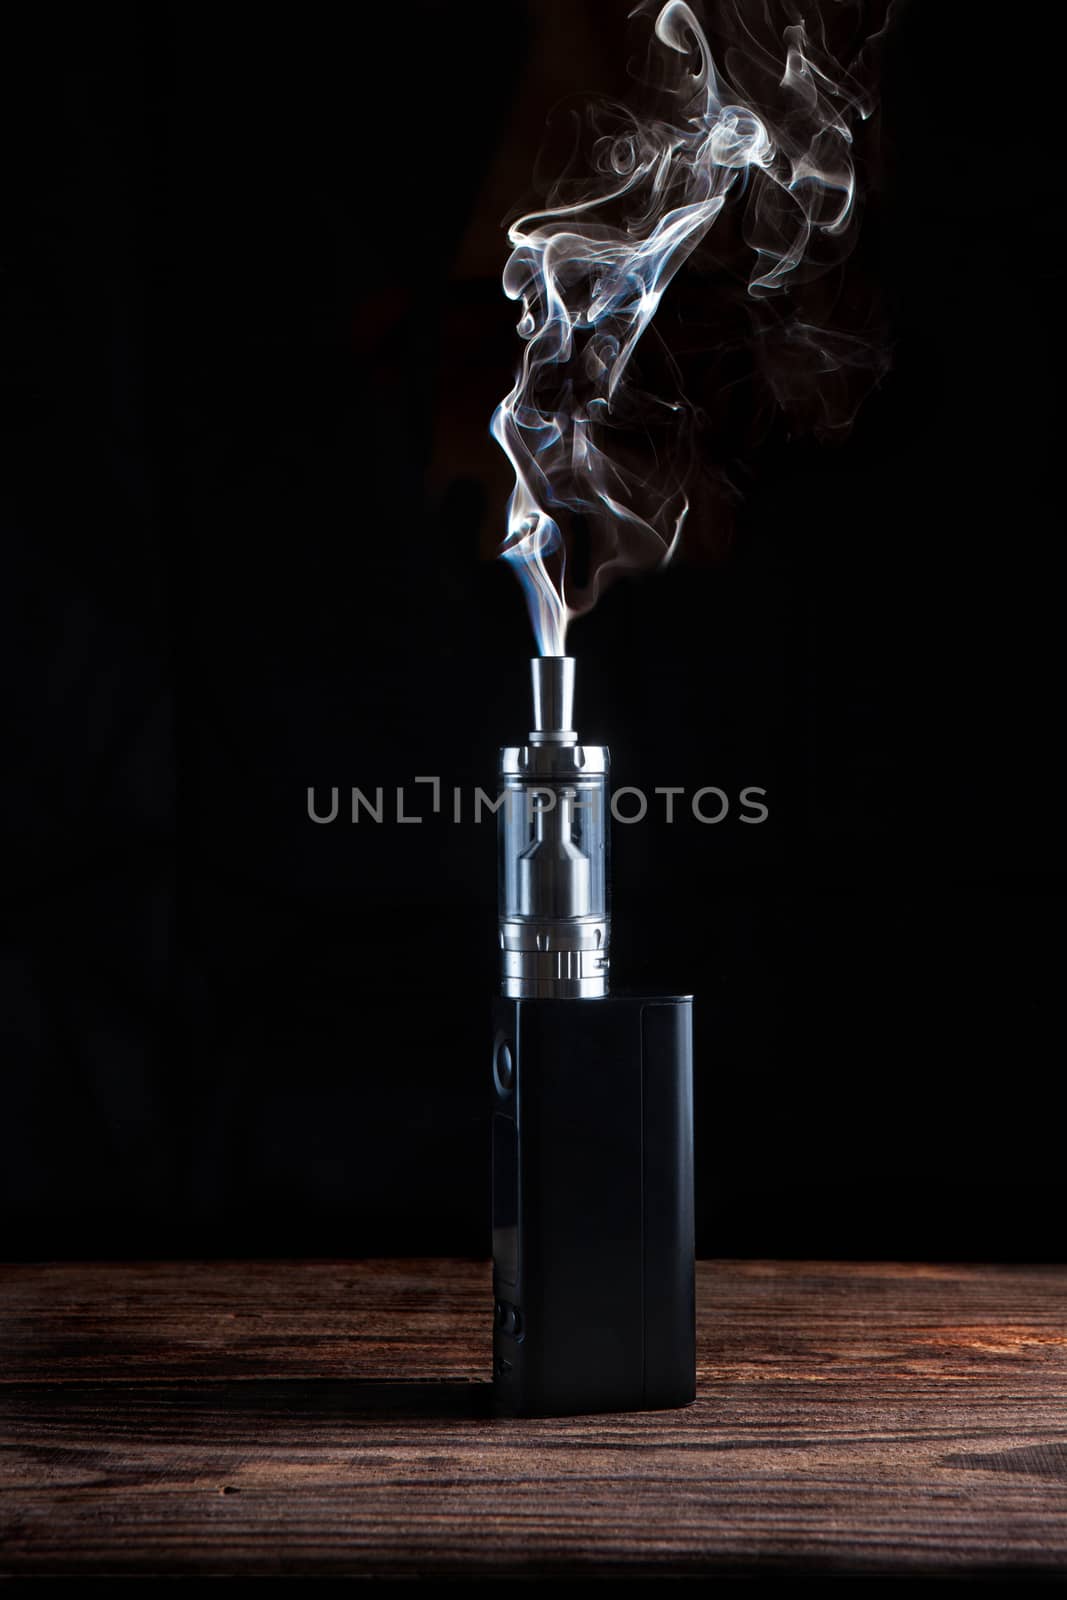 electronic cigarette over a dark background by fotoru